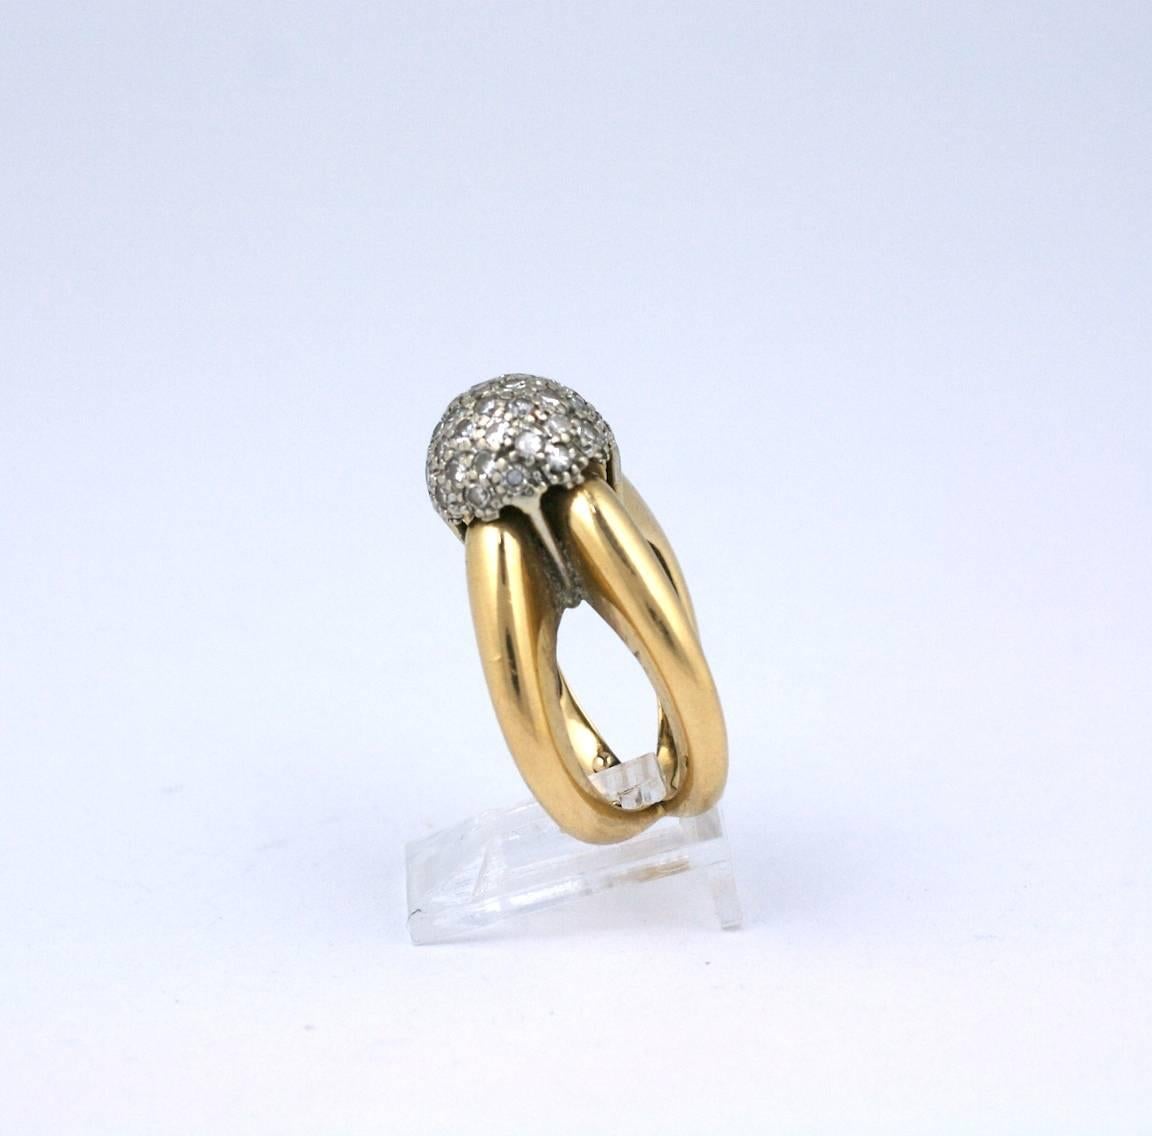 Modernist Pave Diamond Ball Ring in 14k gold. Striking 